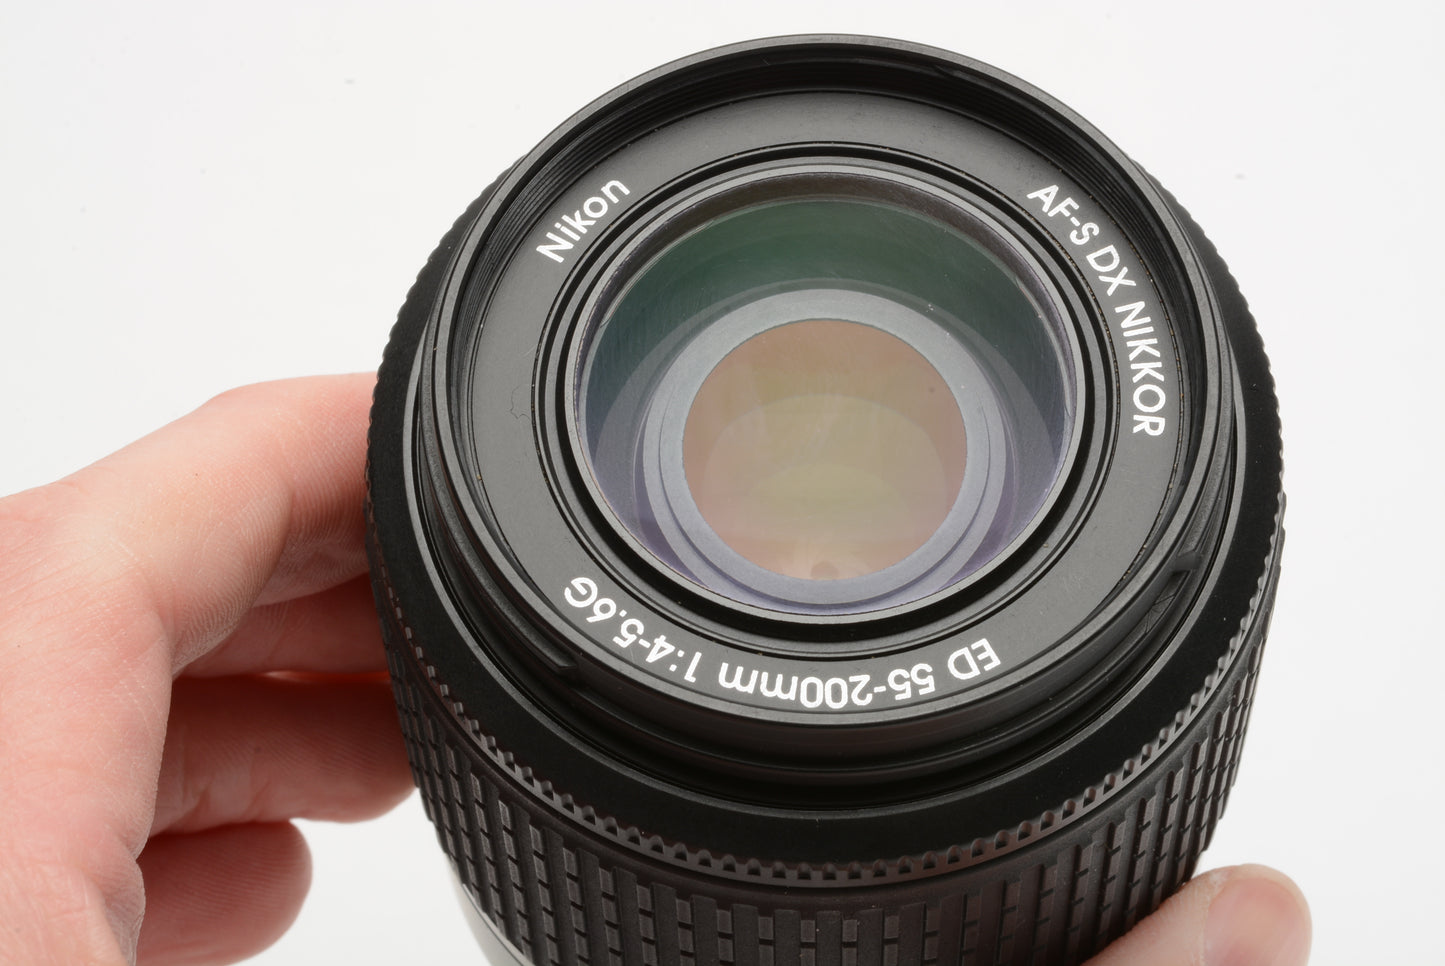 Nikon AFS Nikkor 55-200mm F4-5.6G ED DX zoom lens, caps